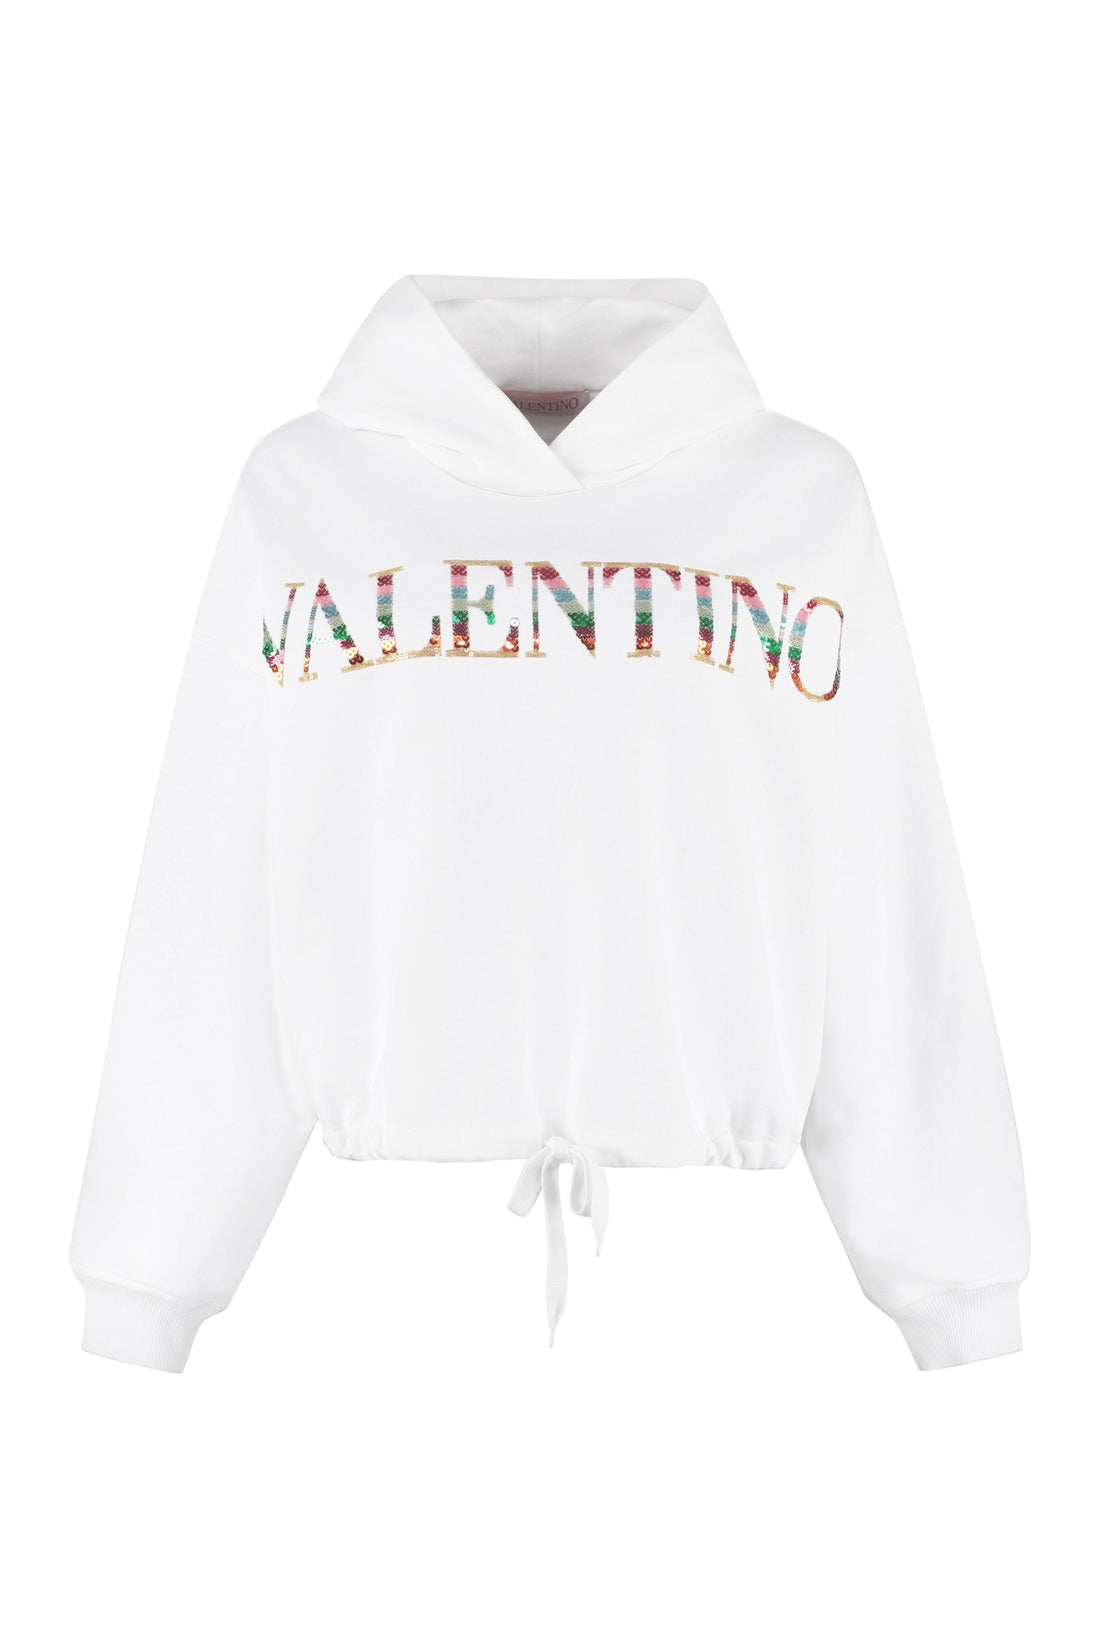 Valentino-OUTLET-SALE-Cotton hoodie-ARCHIVIST